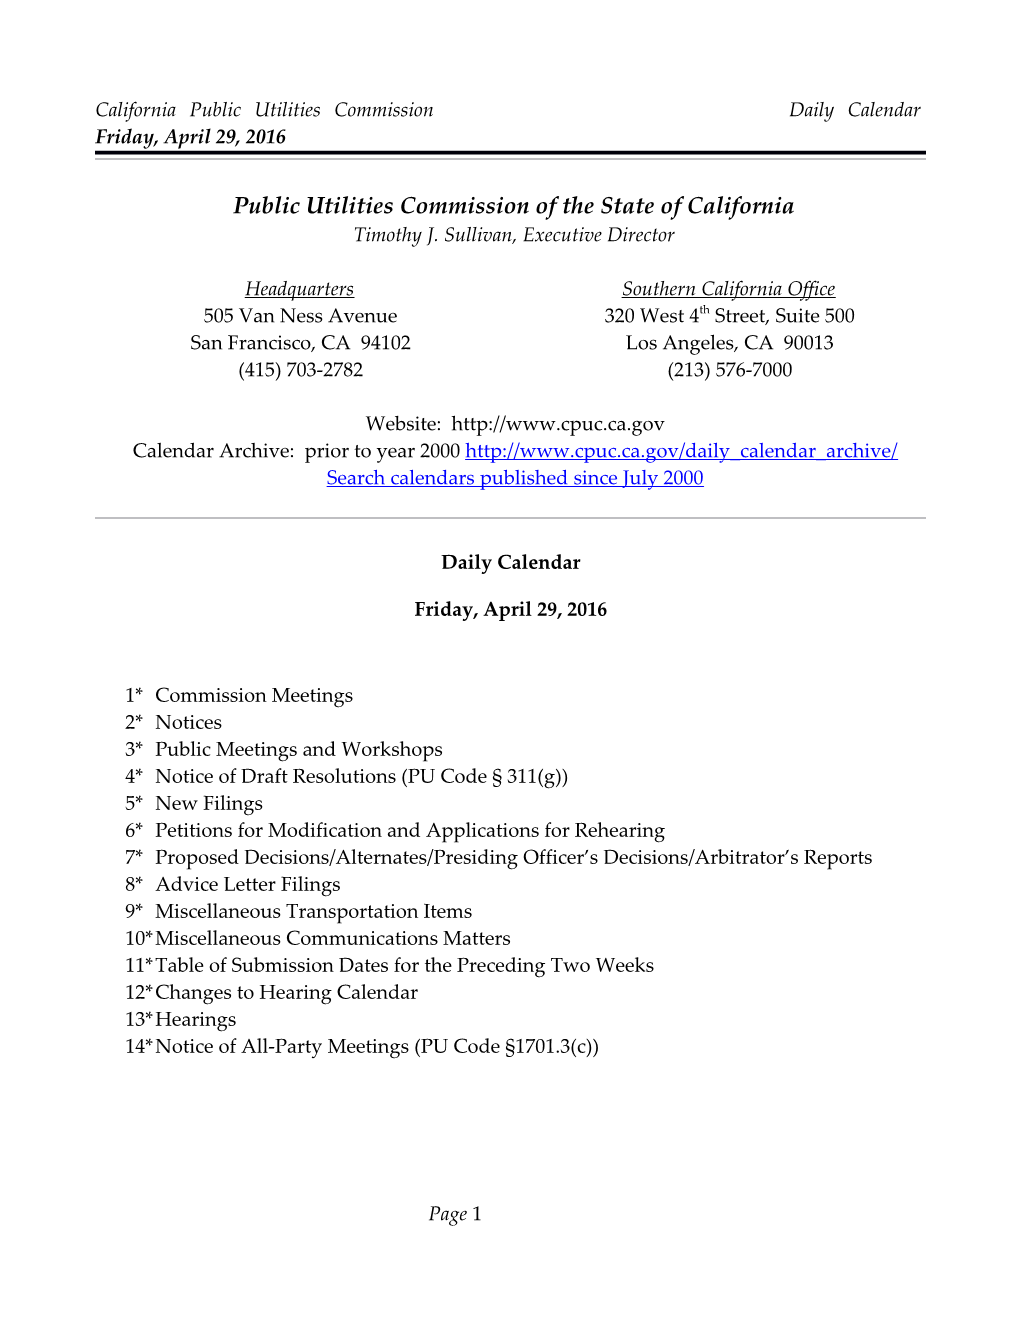 California Public Utilities Commission Daily Calendar Friday, April 29, 2016